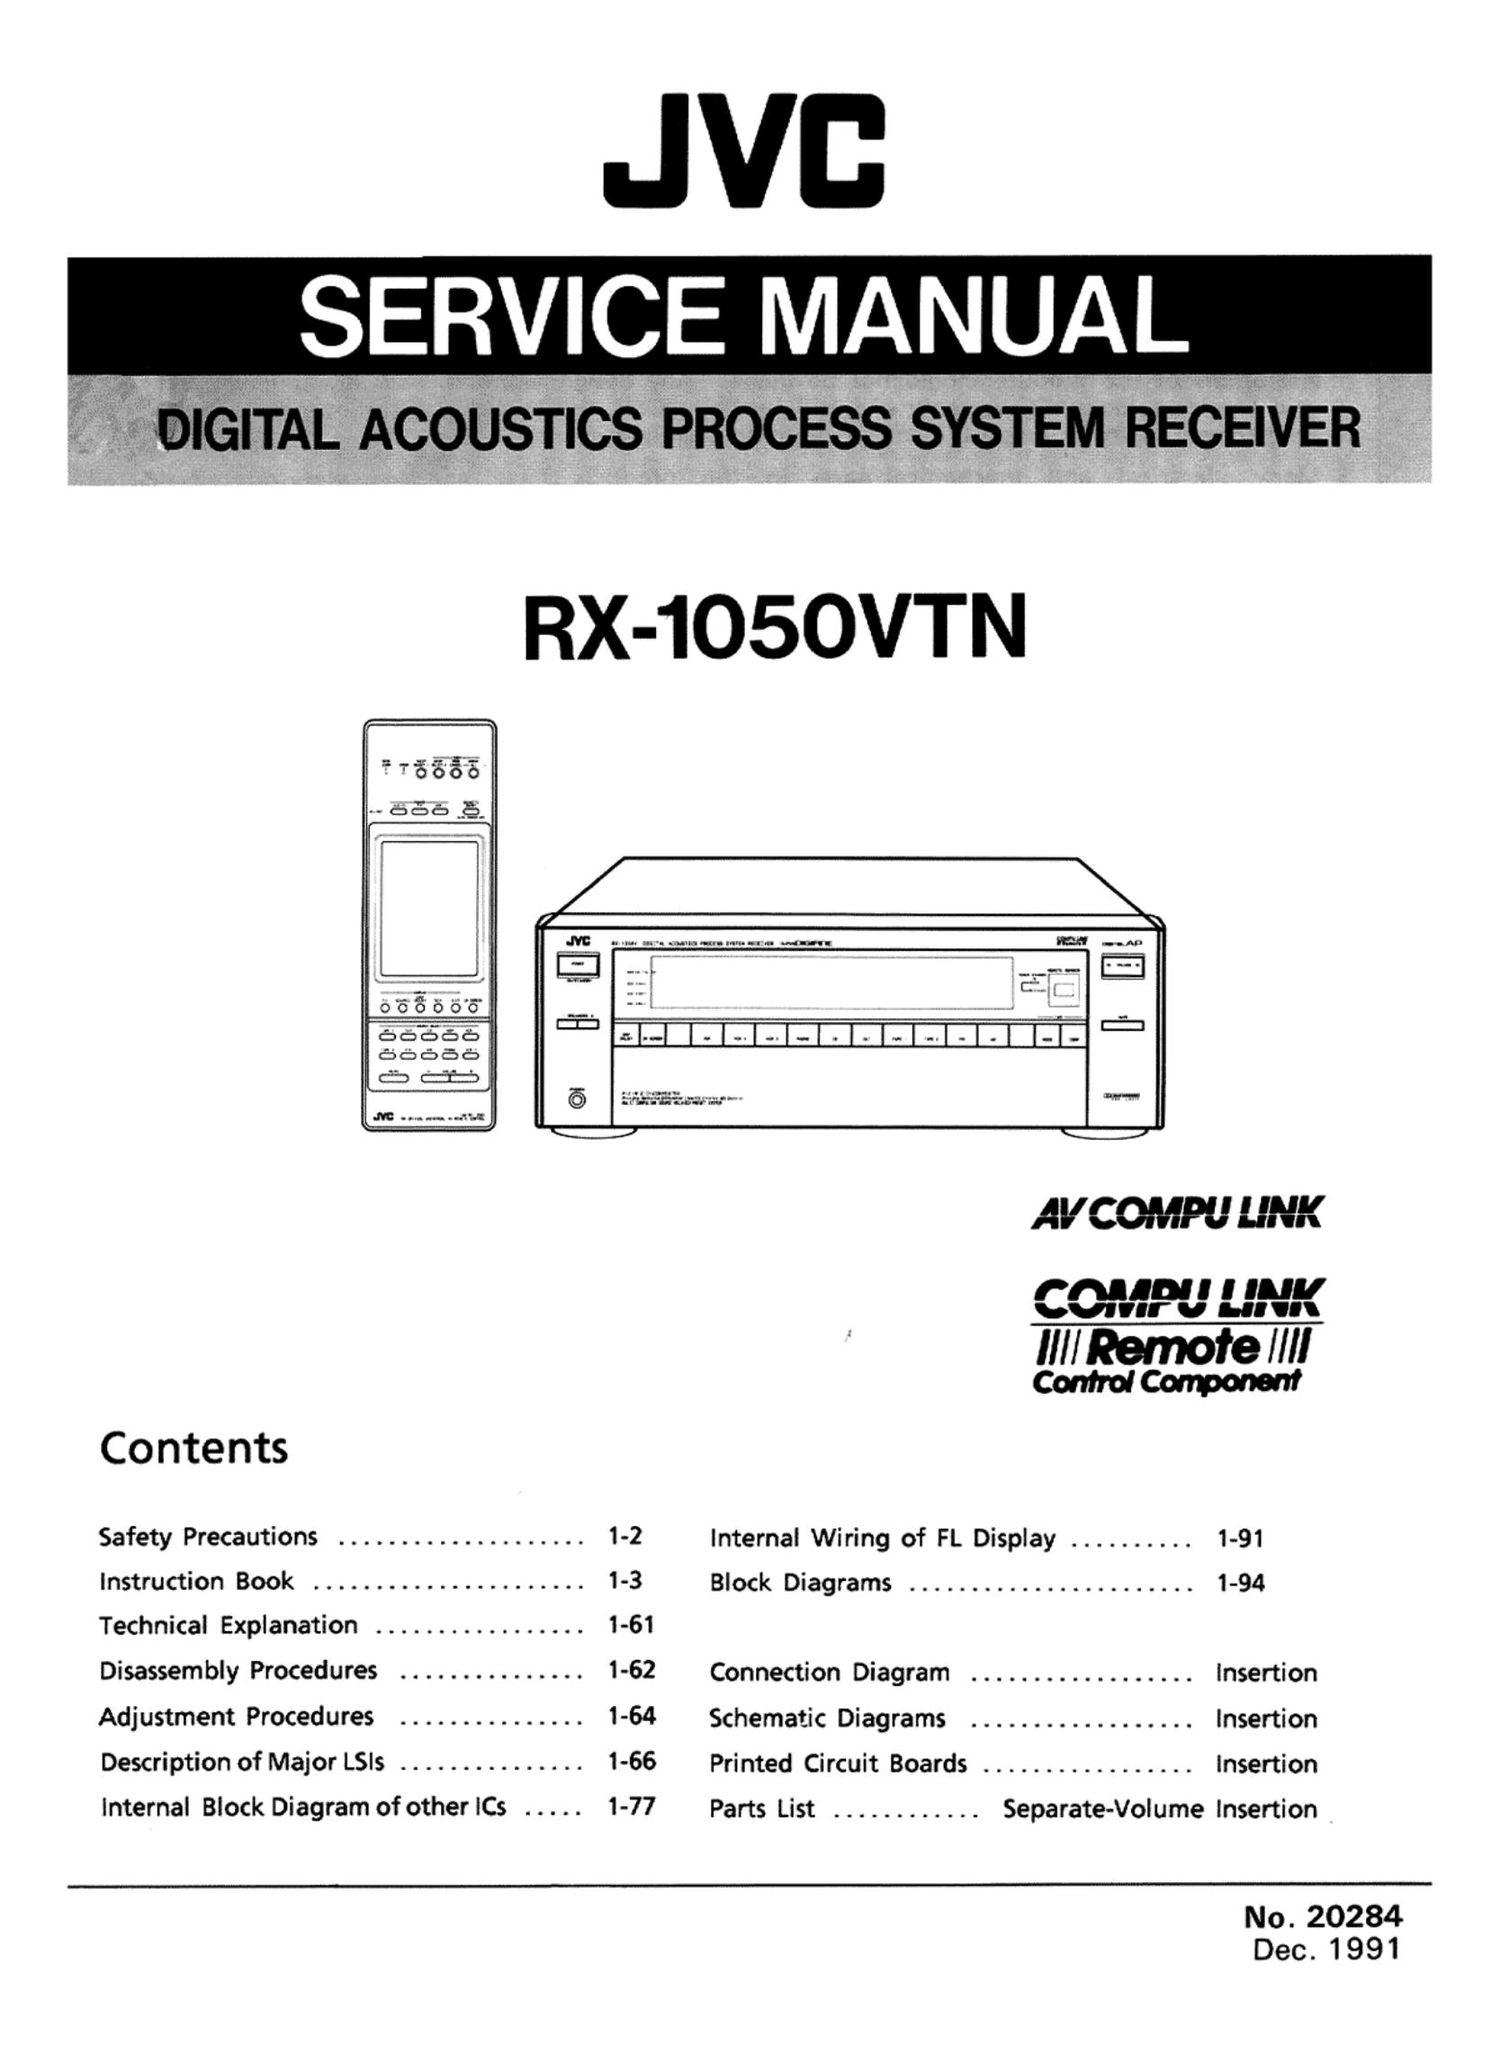 Jvc RX 1050 VTN Service Manual